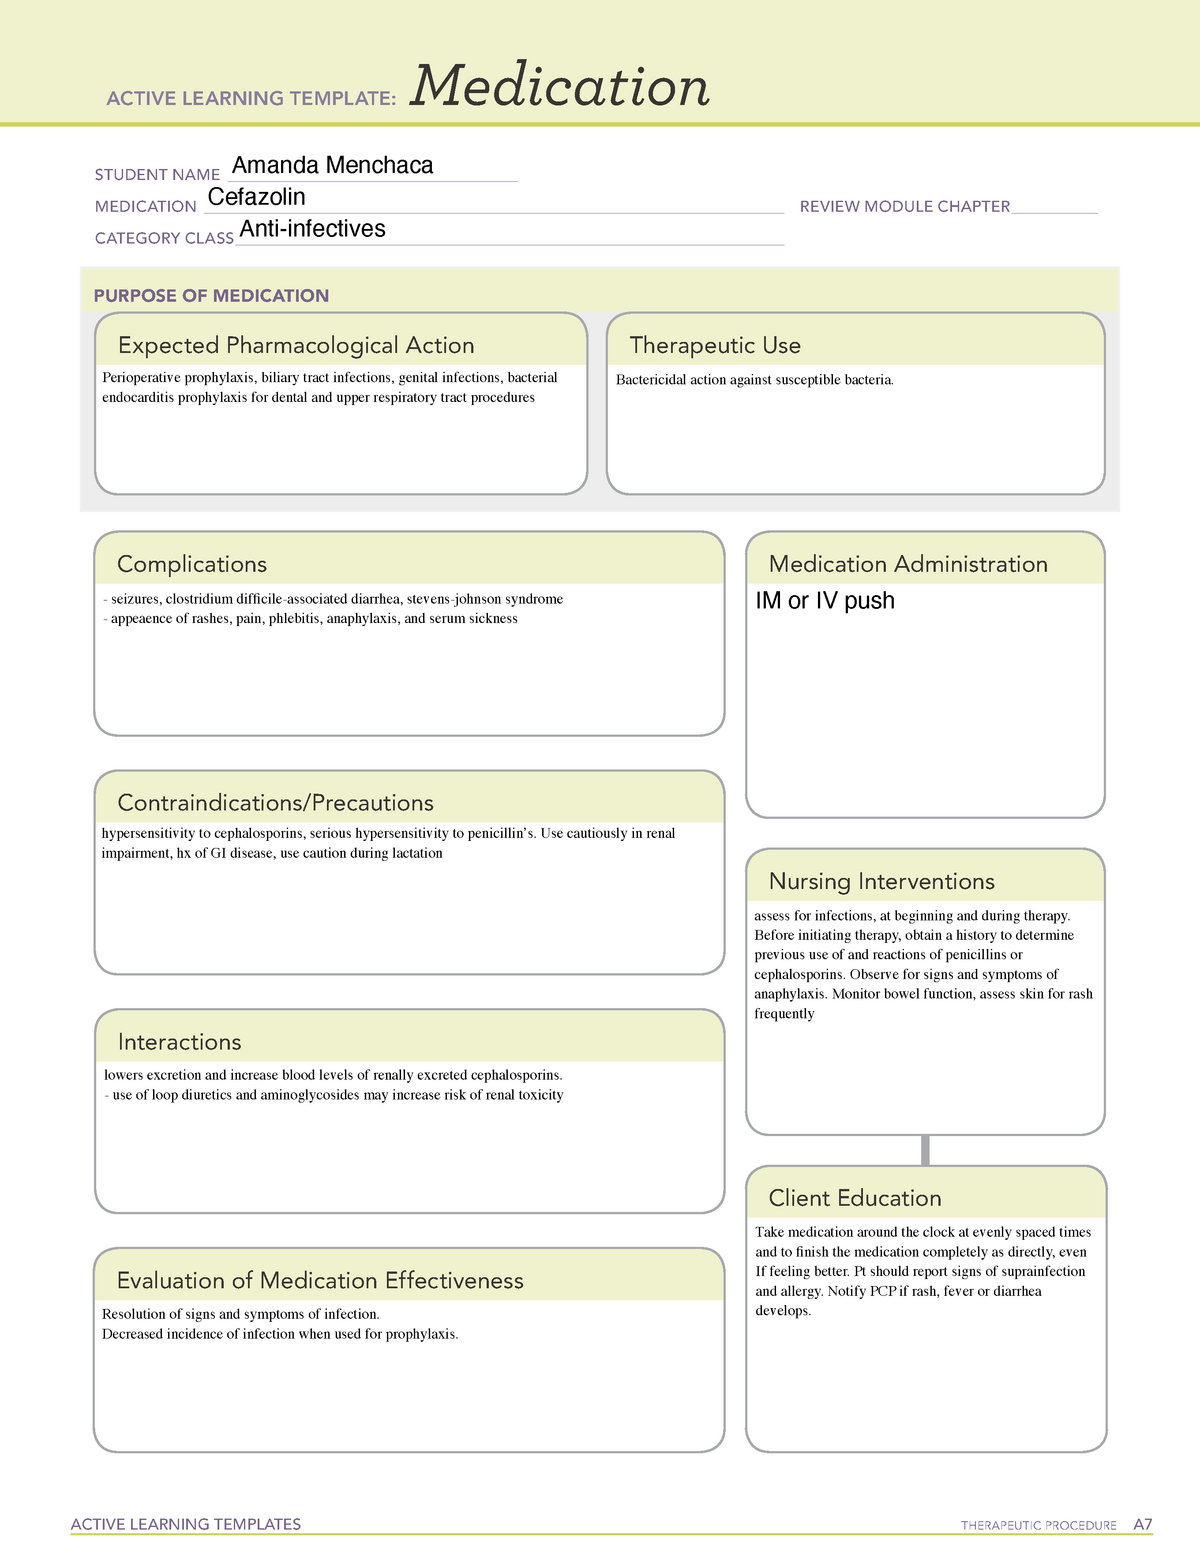 Cefazolin-MED - ATI medication card template - NUR22 Inside Medication Card Template